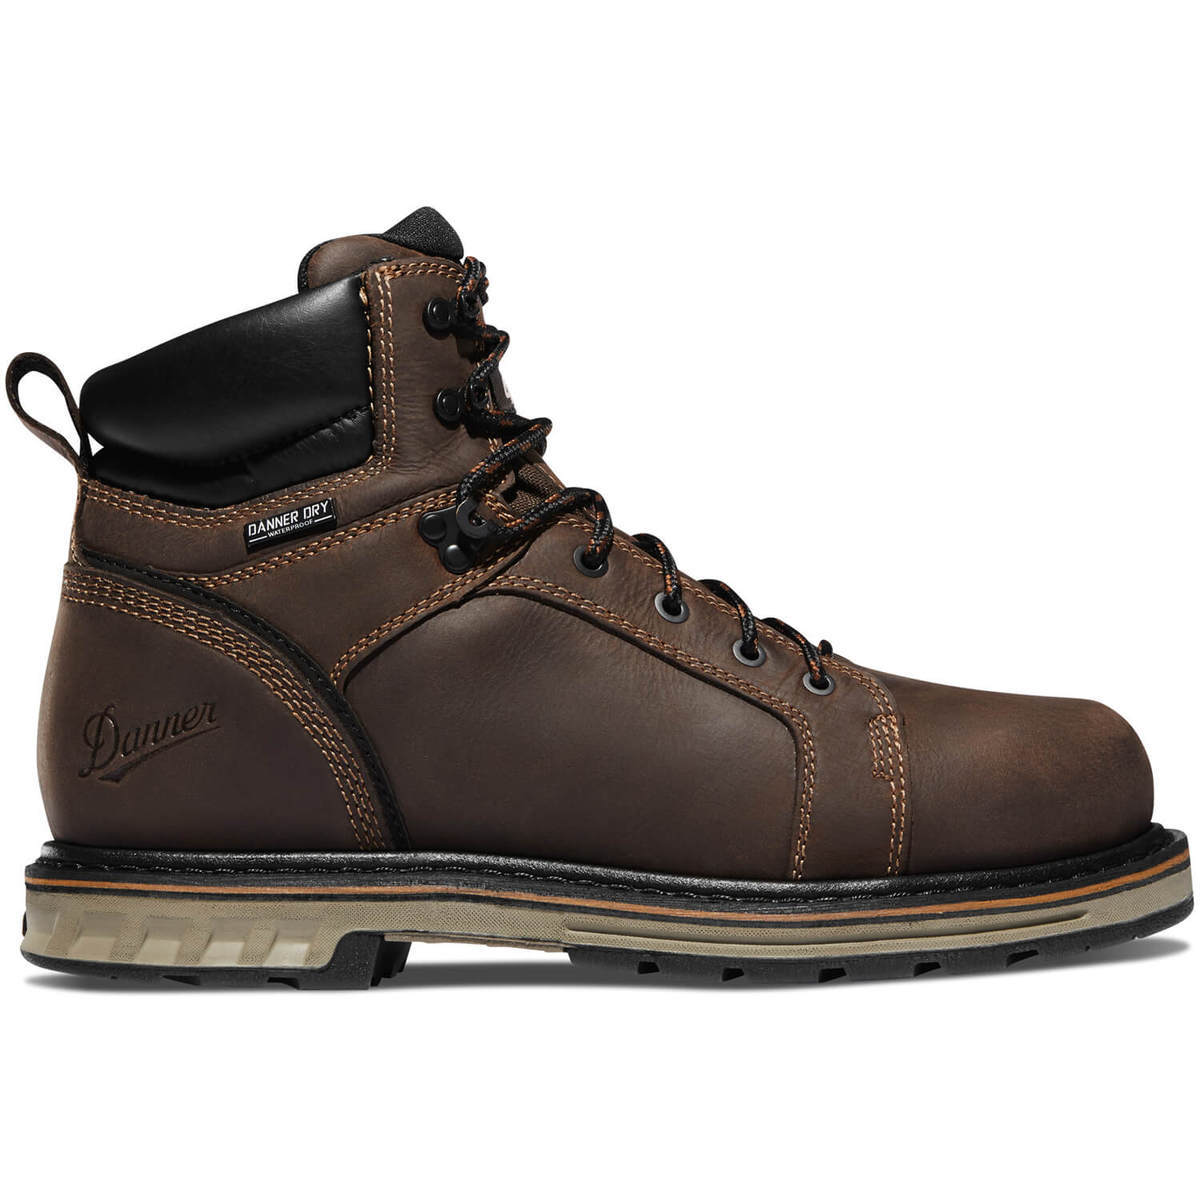 Danner Men's Steel Yard Waterproof Steel Toe Work Boots - Brown - Size 10.5 D - Brown 10.5 